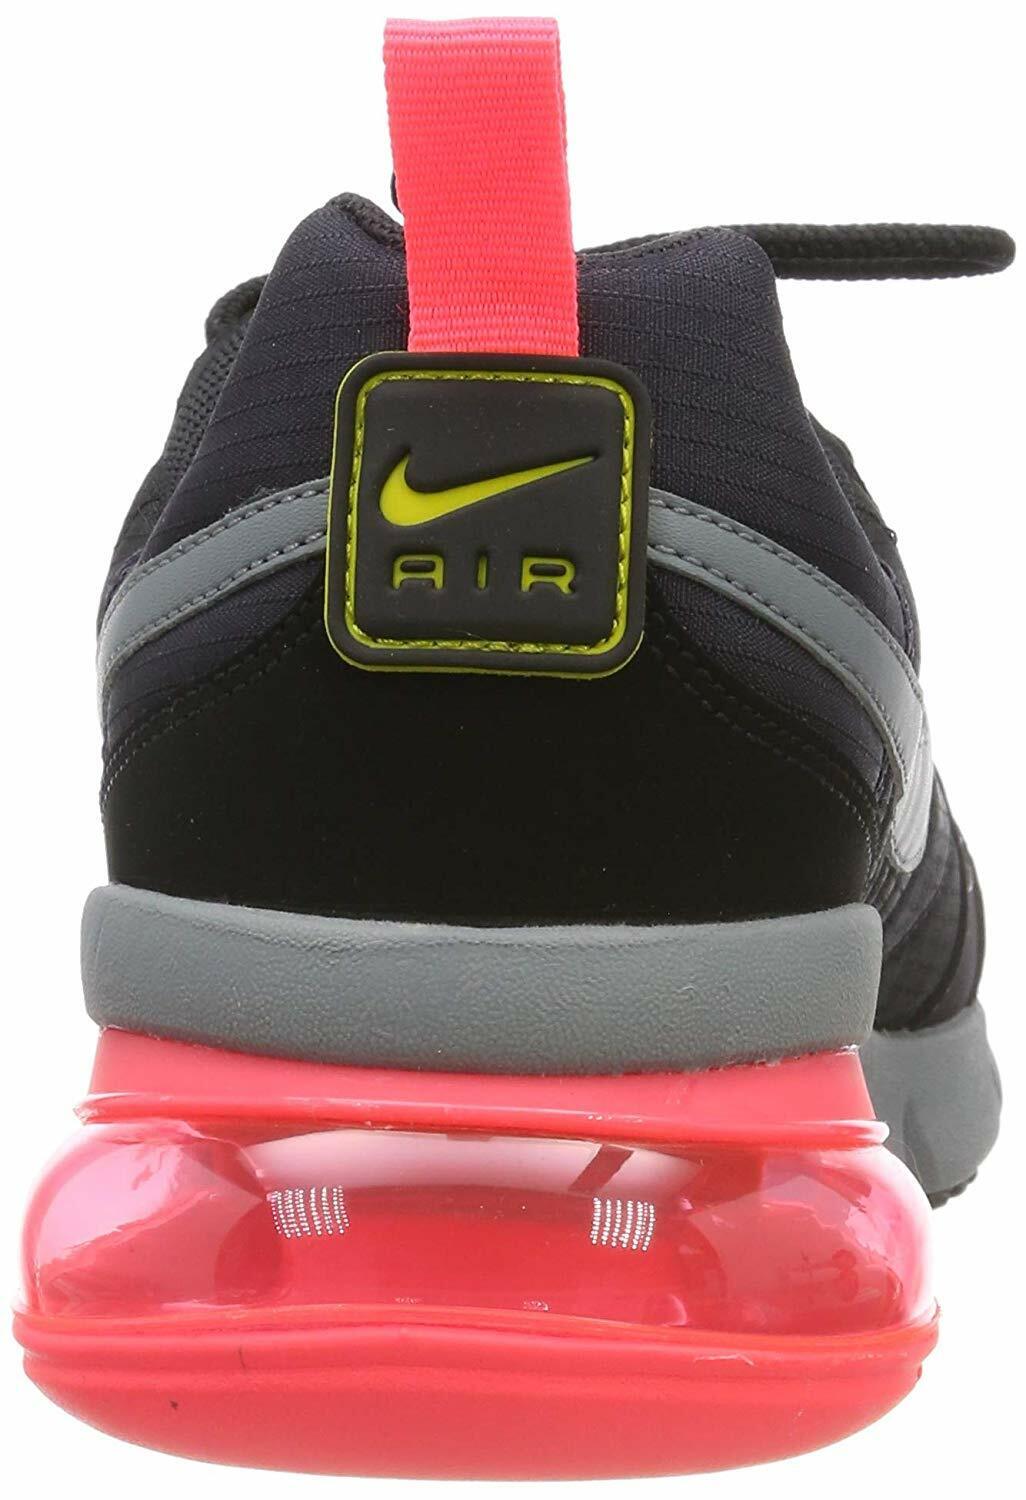 Men's Nike Air Max 270 Futura Running Shoes, AO1569 007 Multi Sizes Black/Cool Grey/Oil Grey